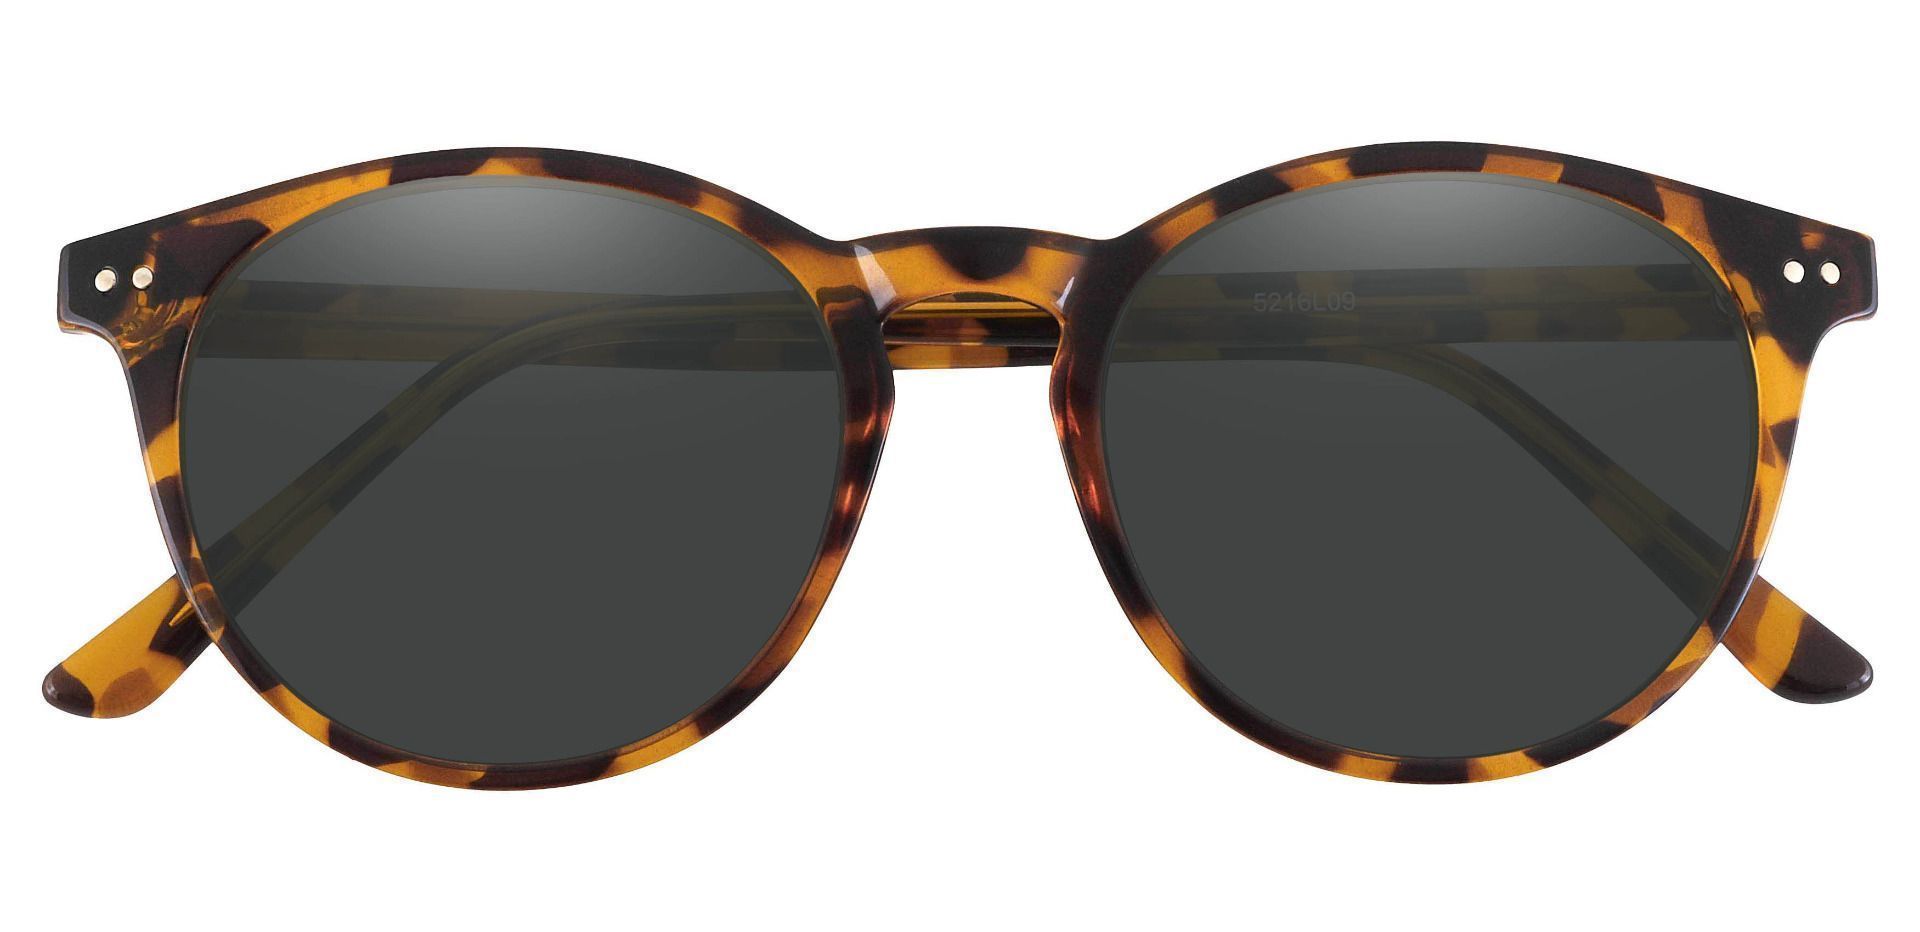 Dormont Round Prescription Sunglasses - Tortoise Frame With Gray Lenses ...